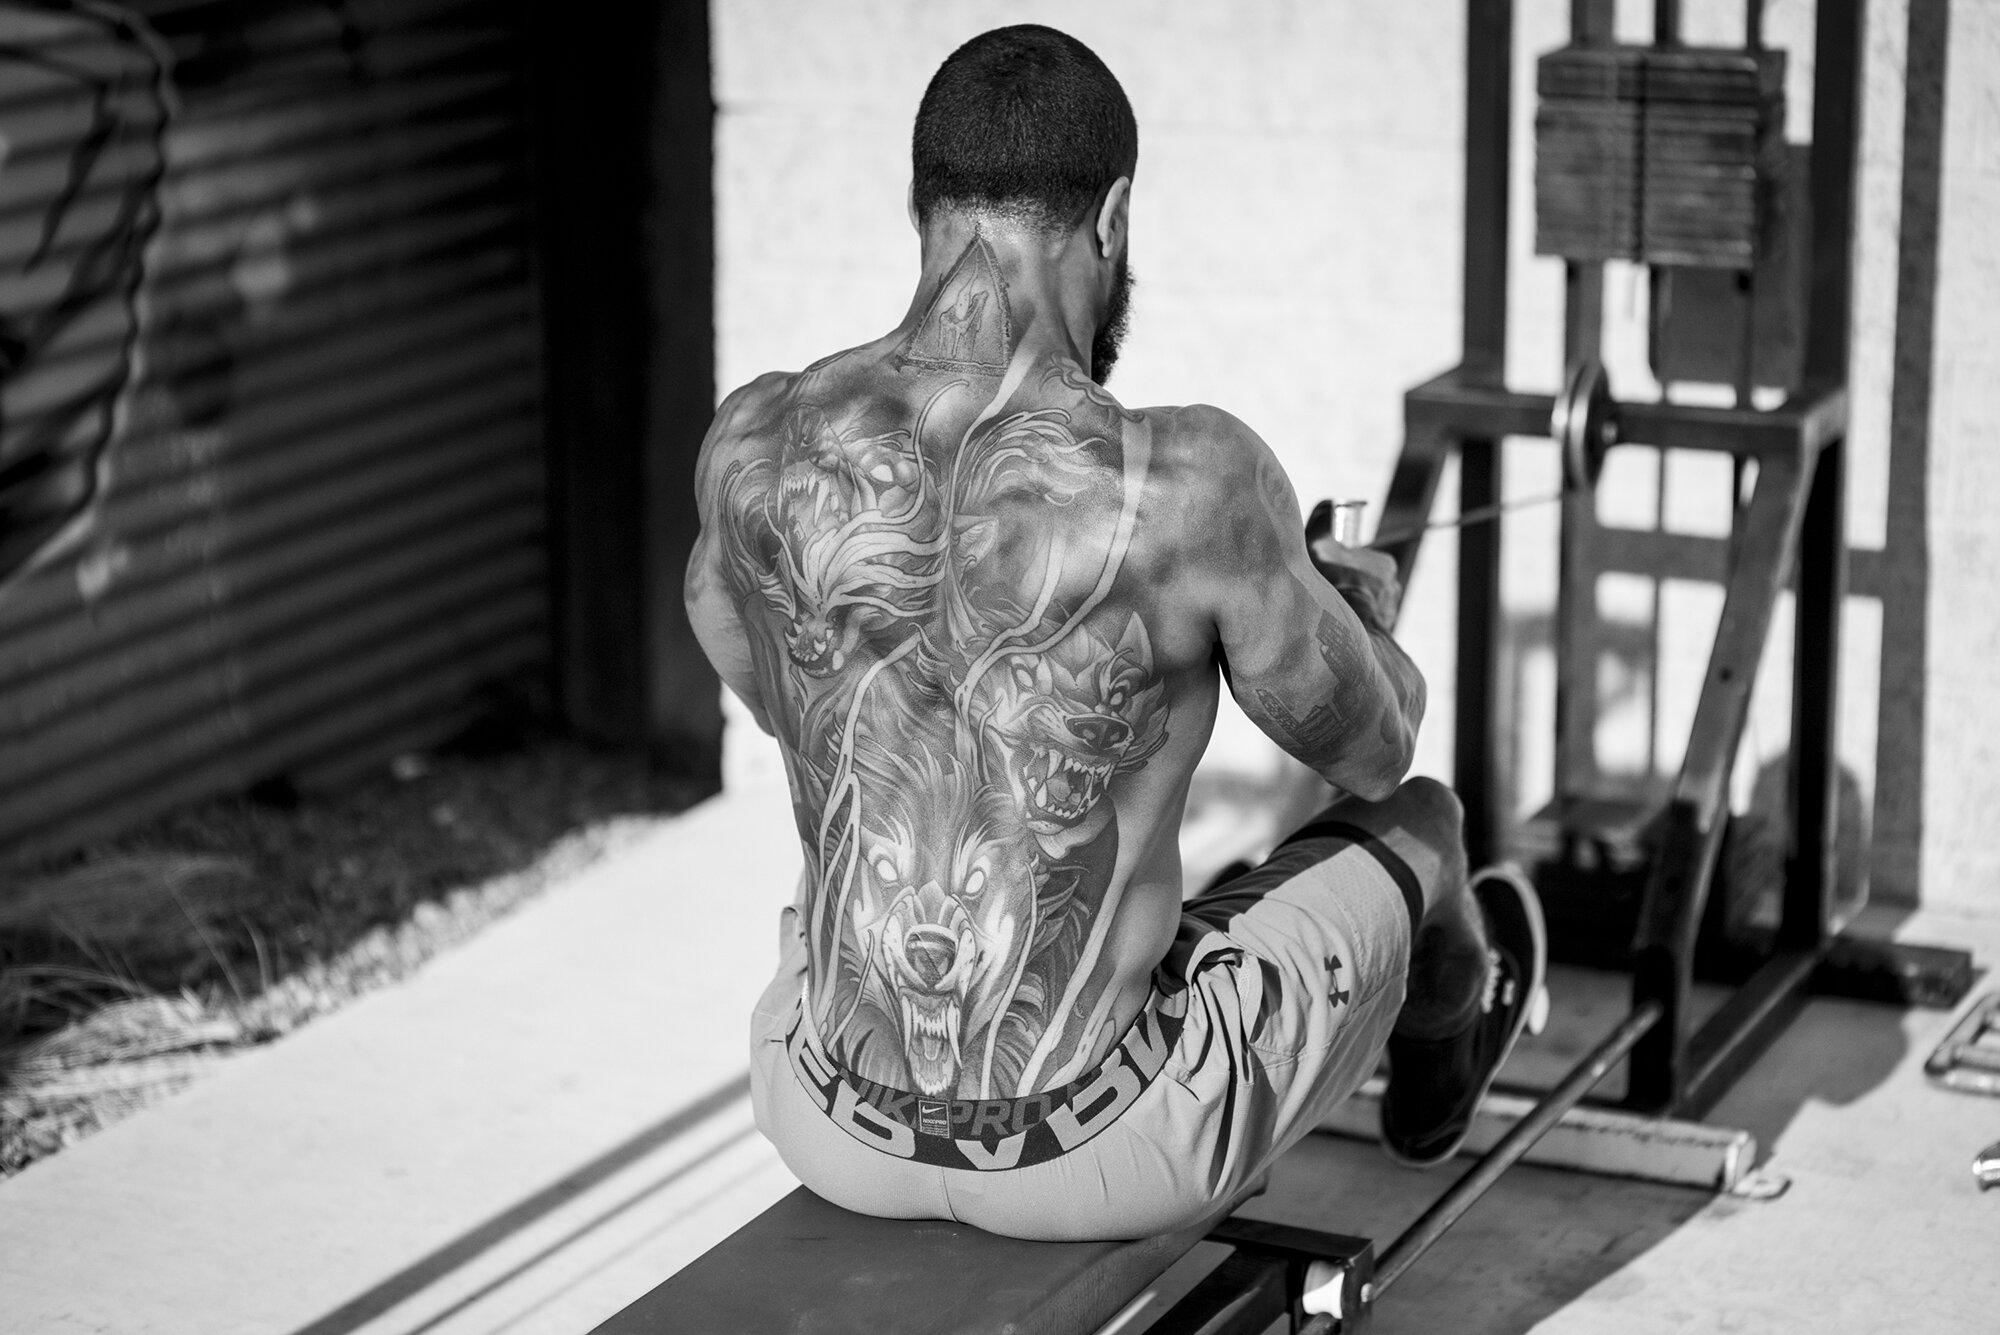  A tattooed athlete working on a back machine.  